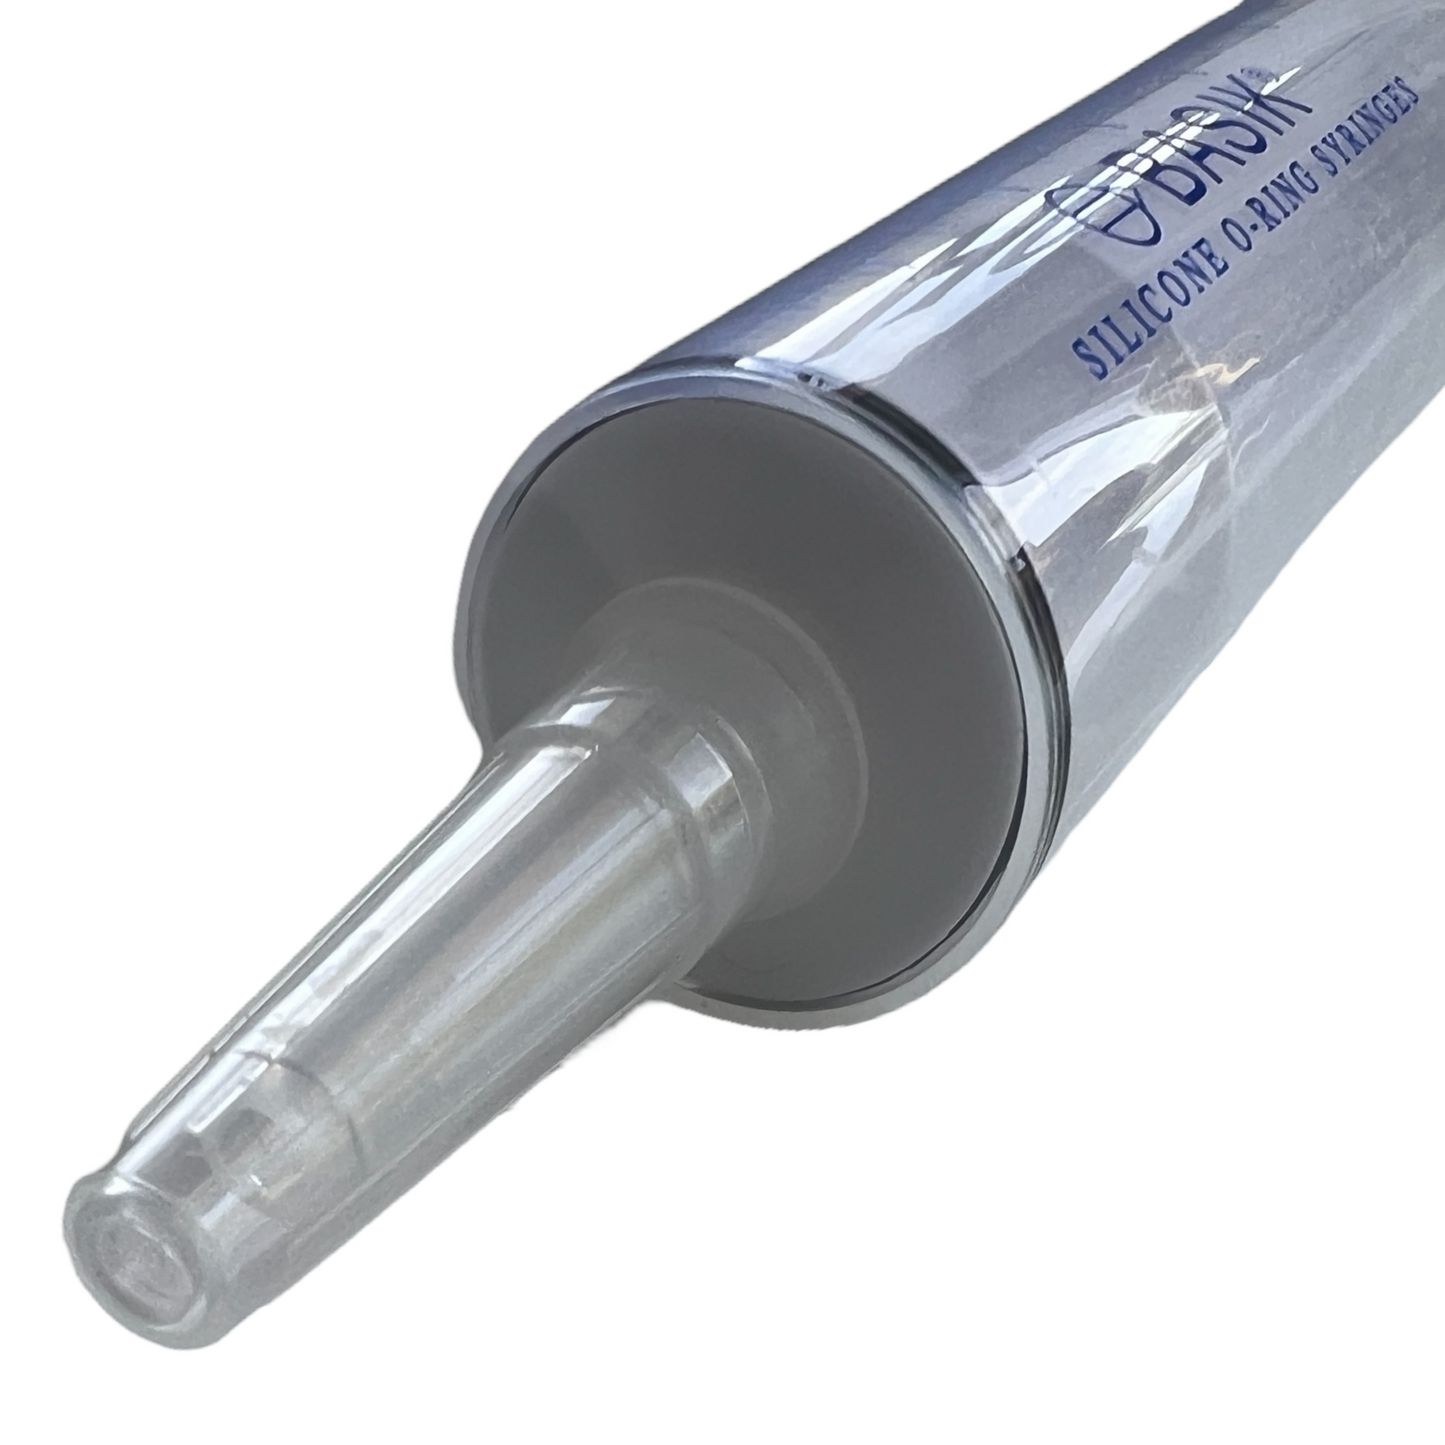 60ml Reusable Catheter Tip Syringe (Basik O-Ring)  SPIRIT SPARKPLUGS   